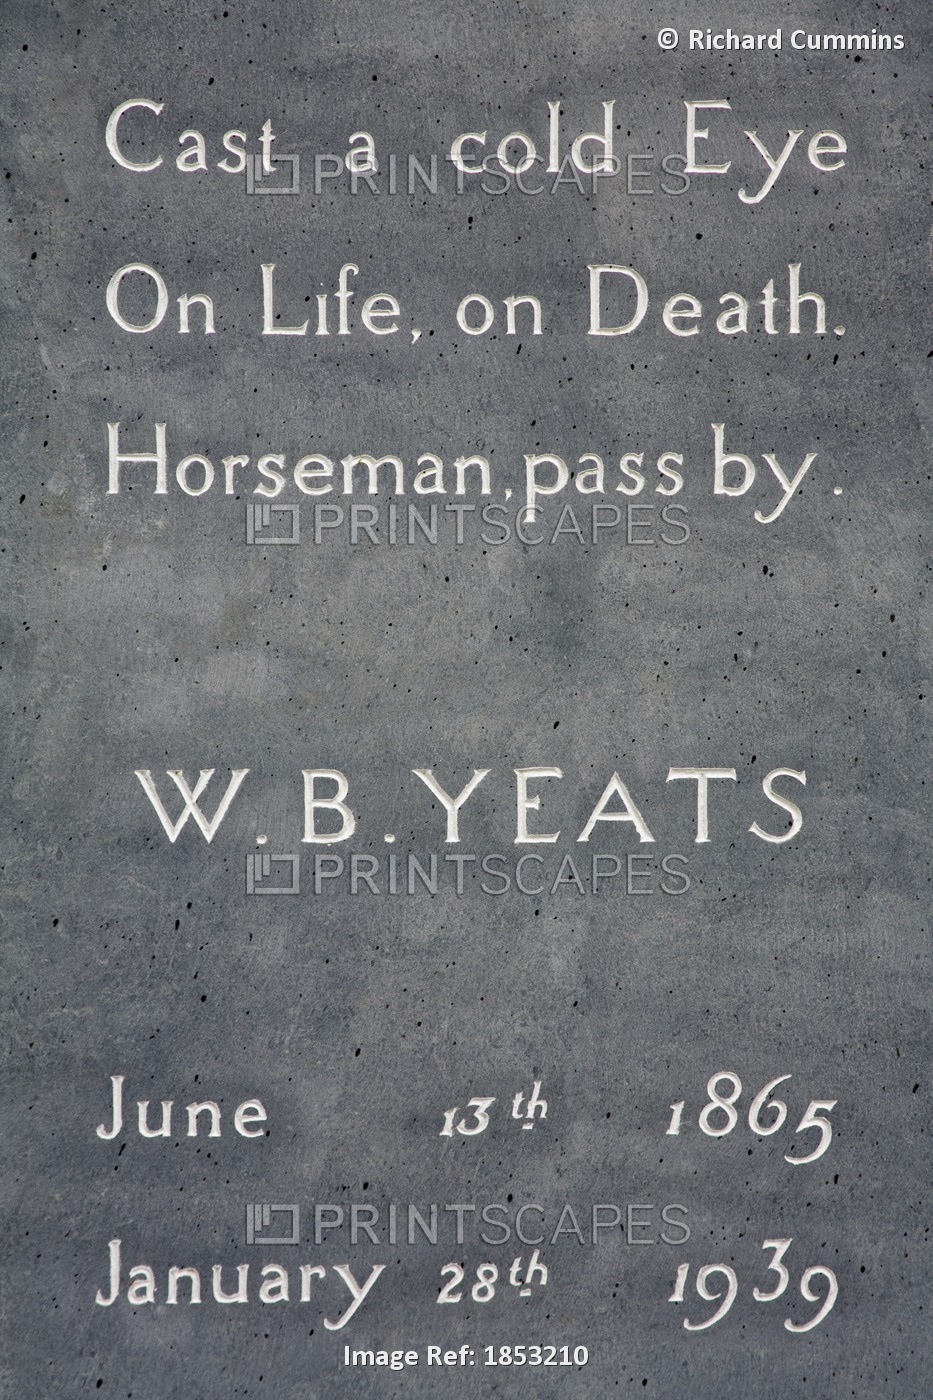 Headstone Of W. B. Yeats, Drumcliffe, County Sligo, Ireland